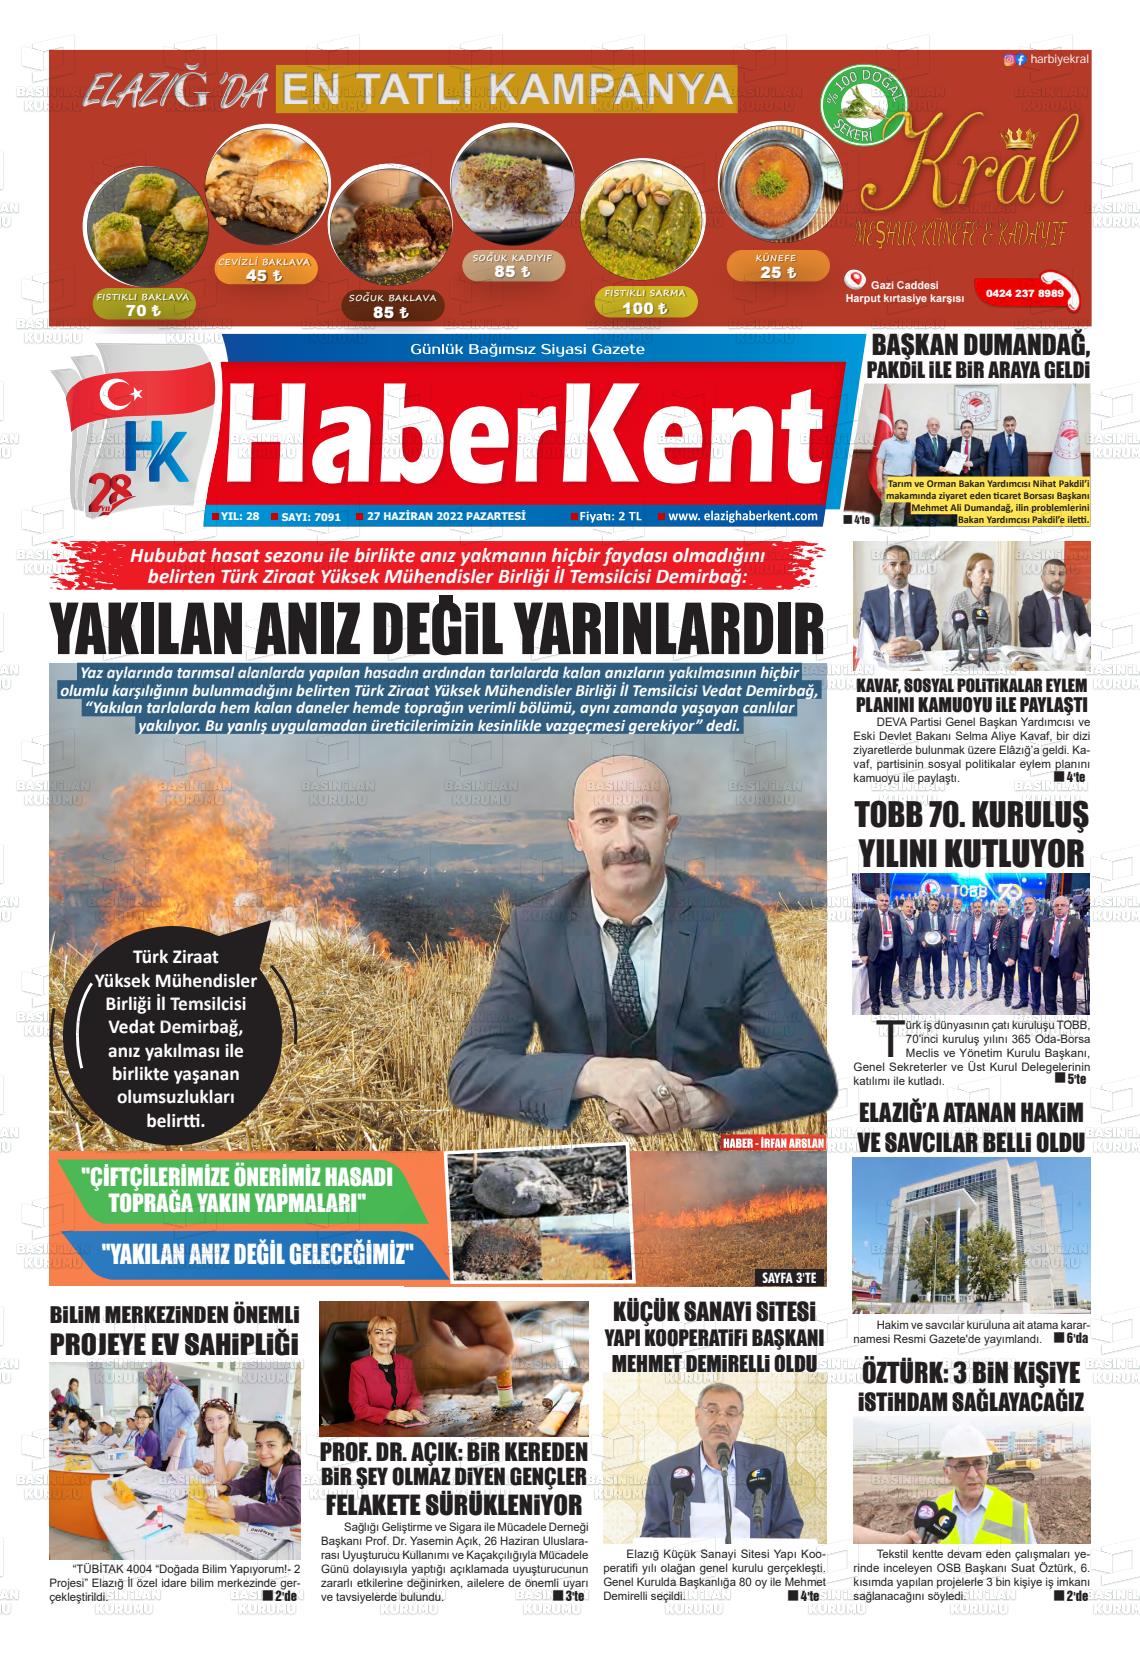 27 Haziran 2022 Elazığ Haberkent Gazete Manşeti